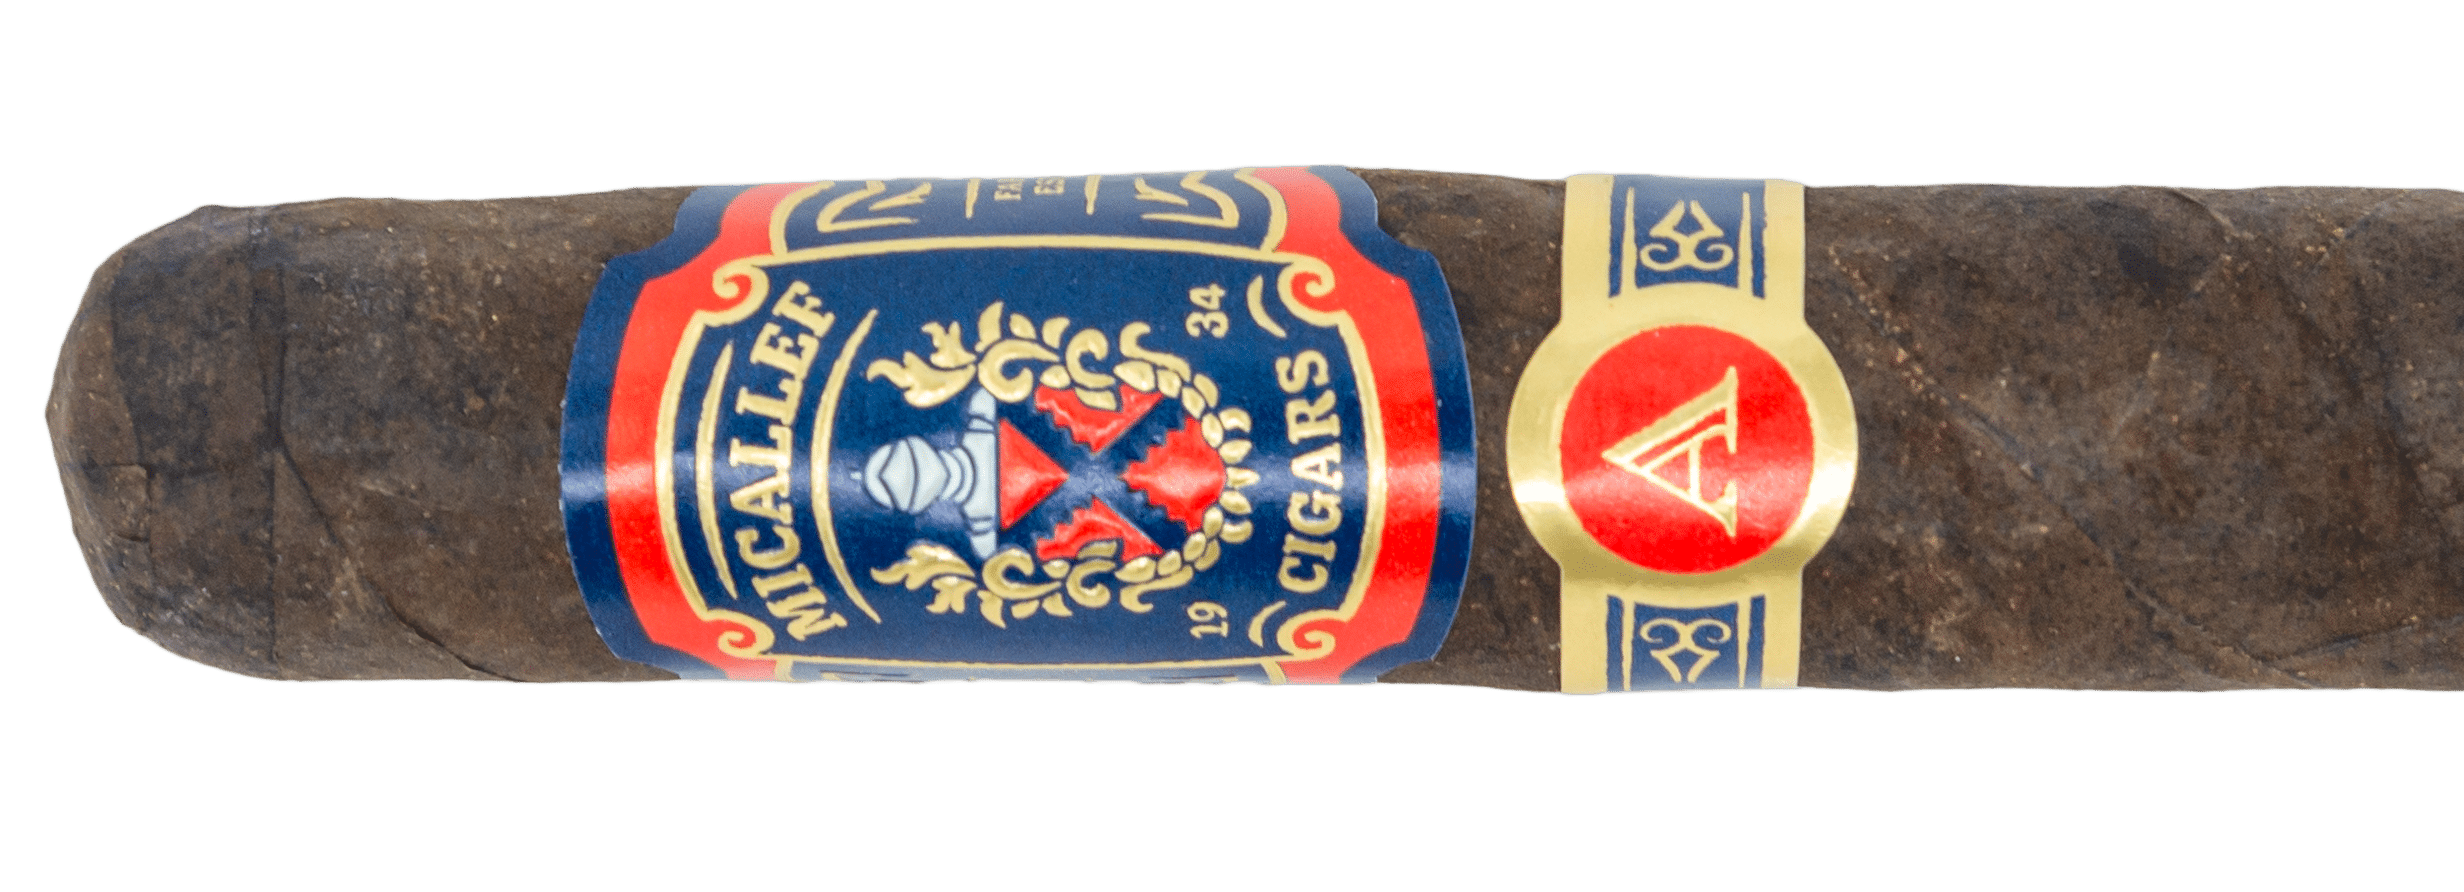 Micallef A Petit Corona - Blind Cigar Review